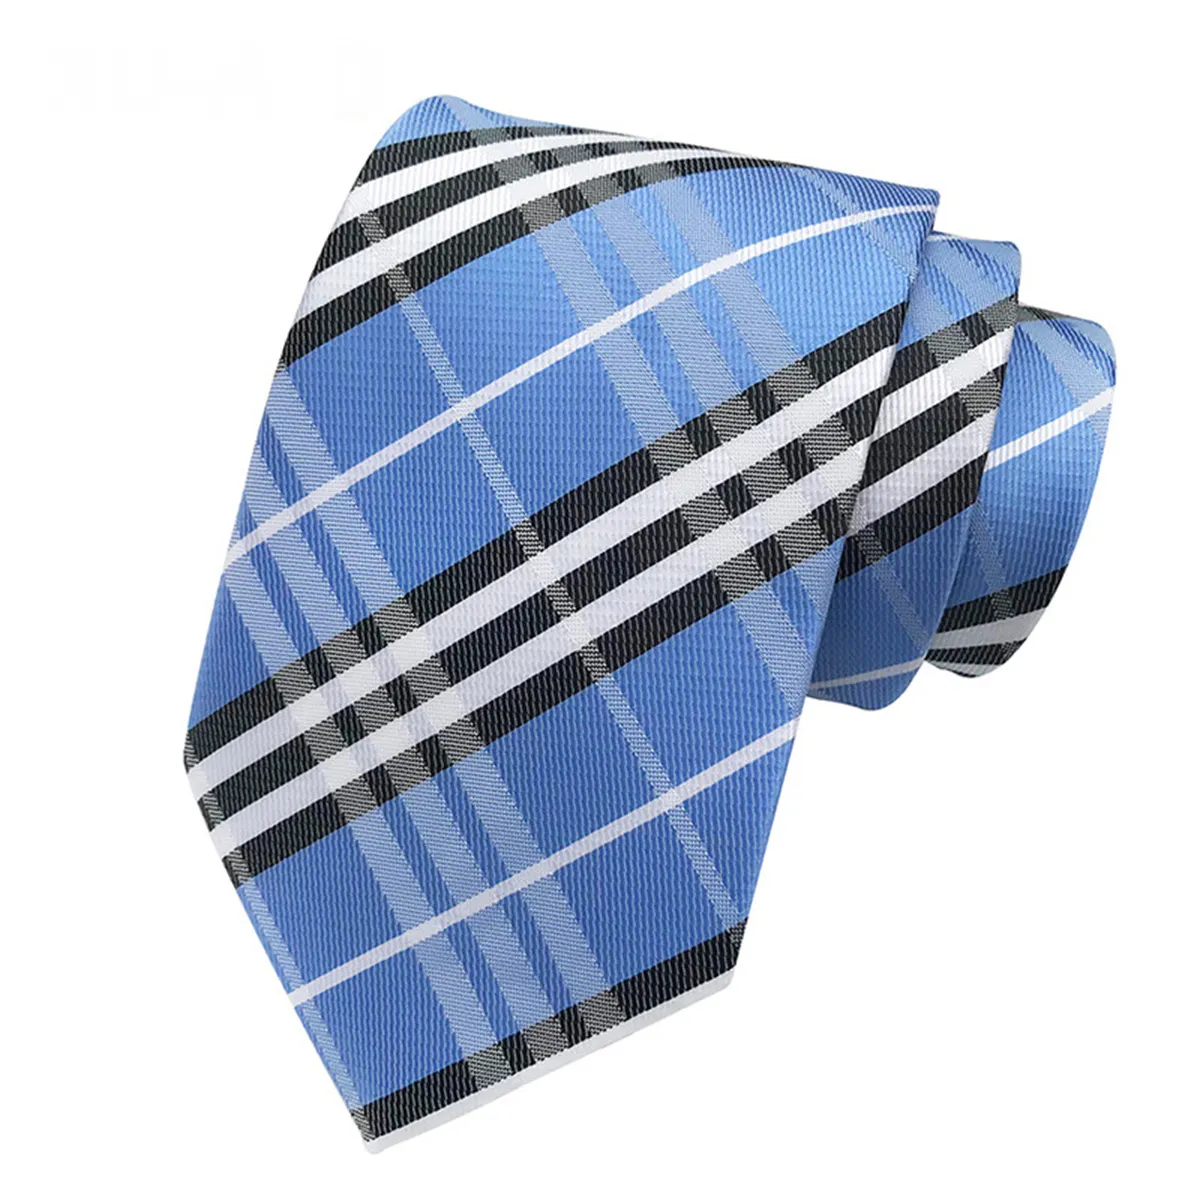 2023 Designer Men's tie fashion tie brand yarn-dyed ties retro brand tie men's party casual Neck Ties Business tie with box 88dcv12